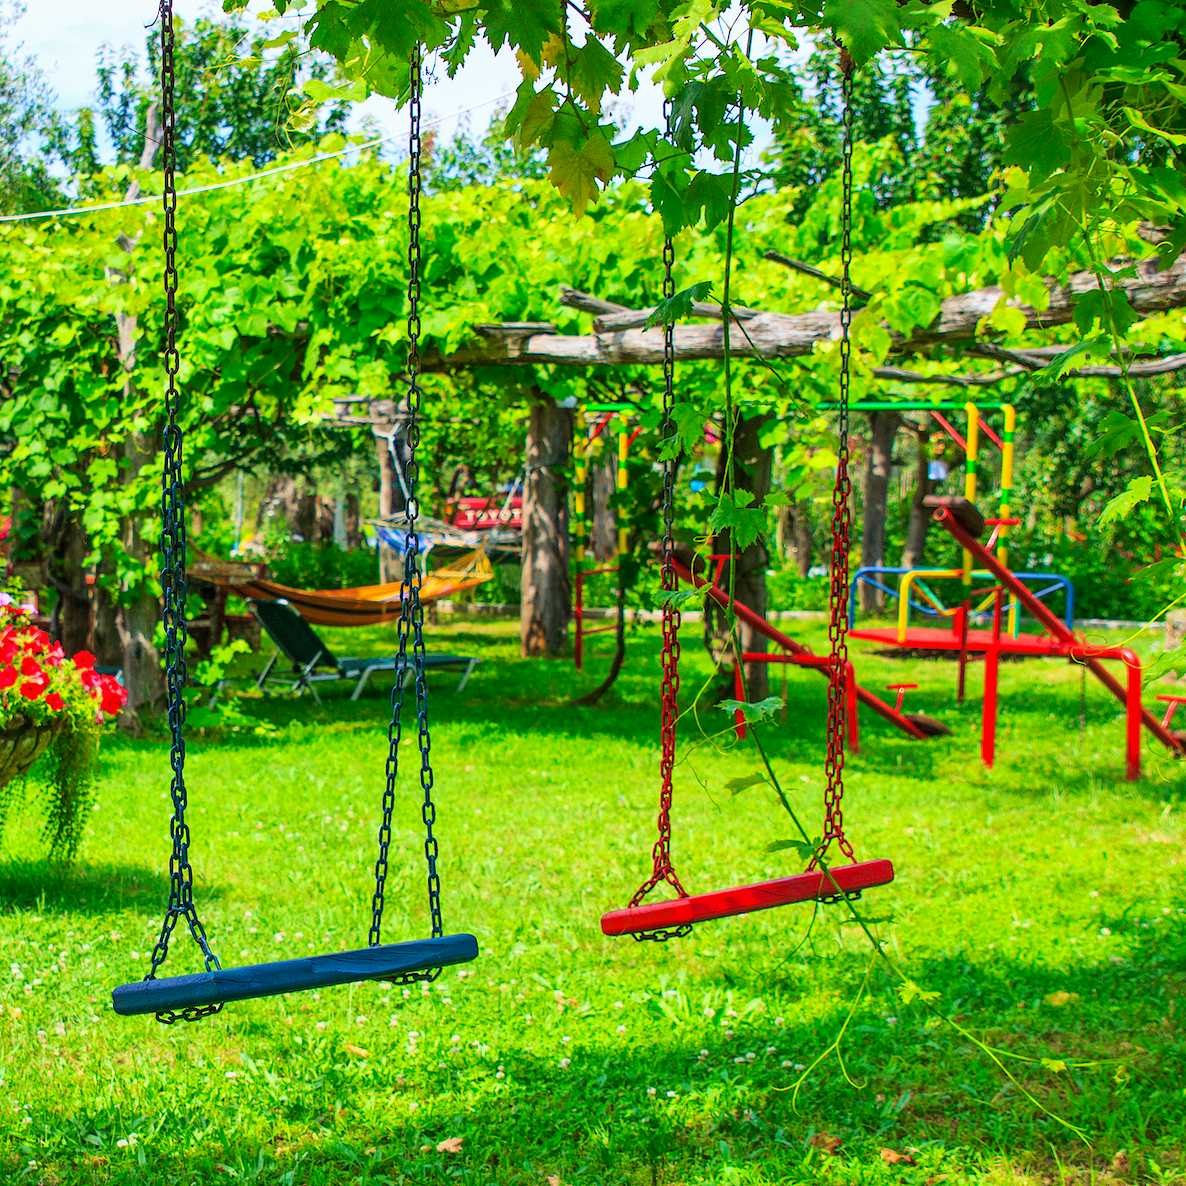 Photo Caption: Παρακολουθήστε τα παιδιά να παίζουν με ασφάλεια στην παιδική χαρά του κήπου